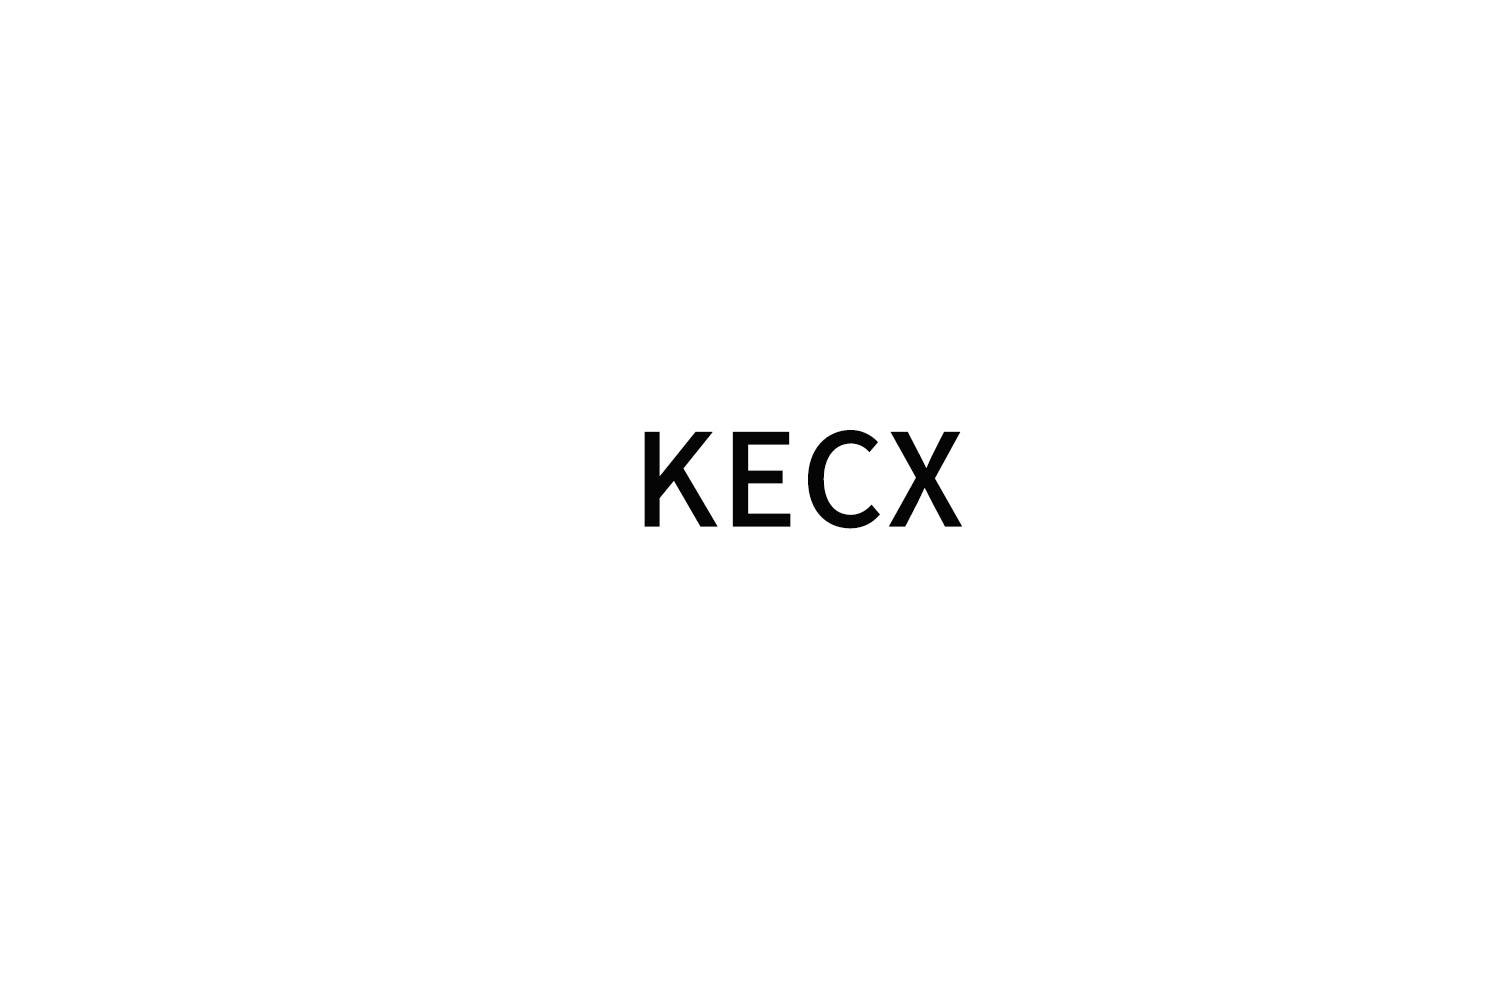 KECX